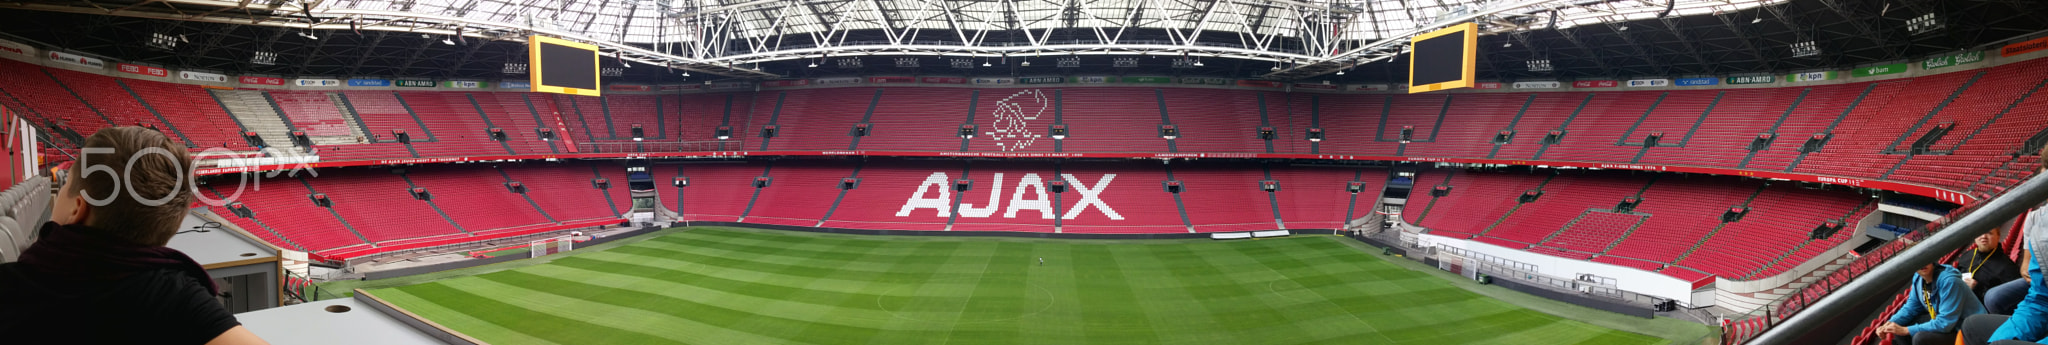 Ajax arena.